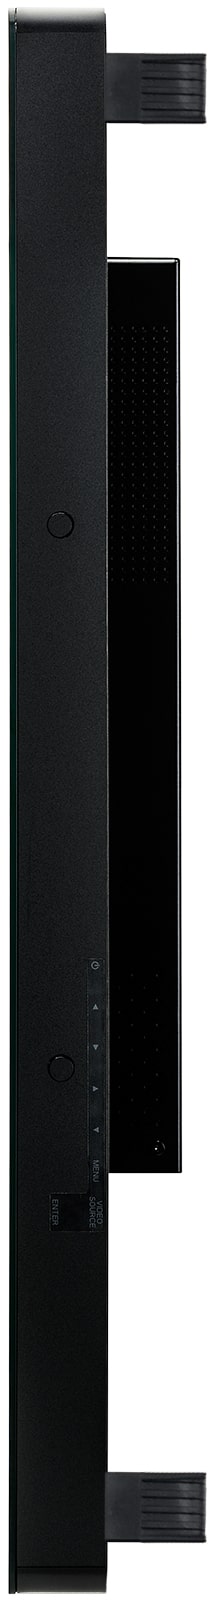 Iiyama ProLite TF4939UHSC-B1AG | 48,5" | Mutli-Touch-Display